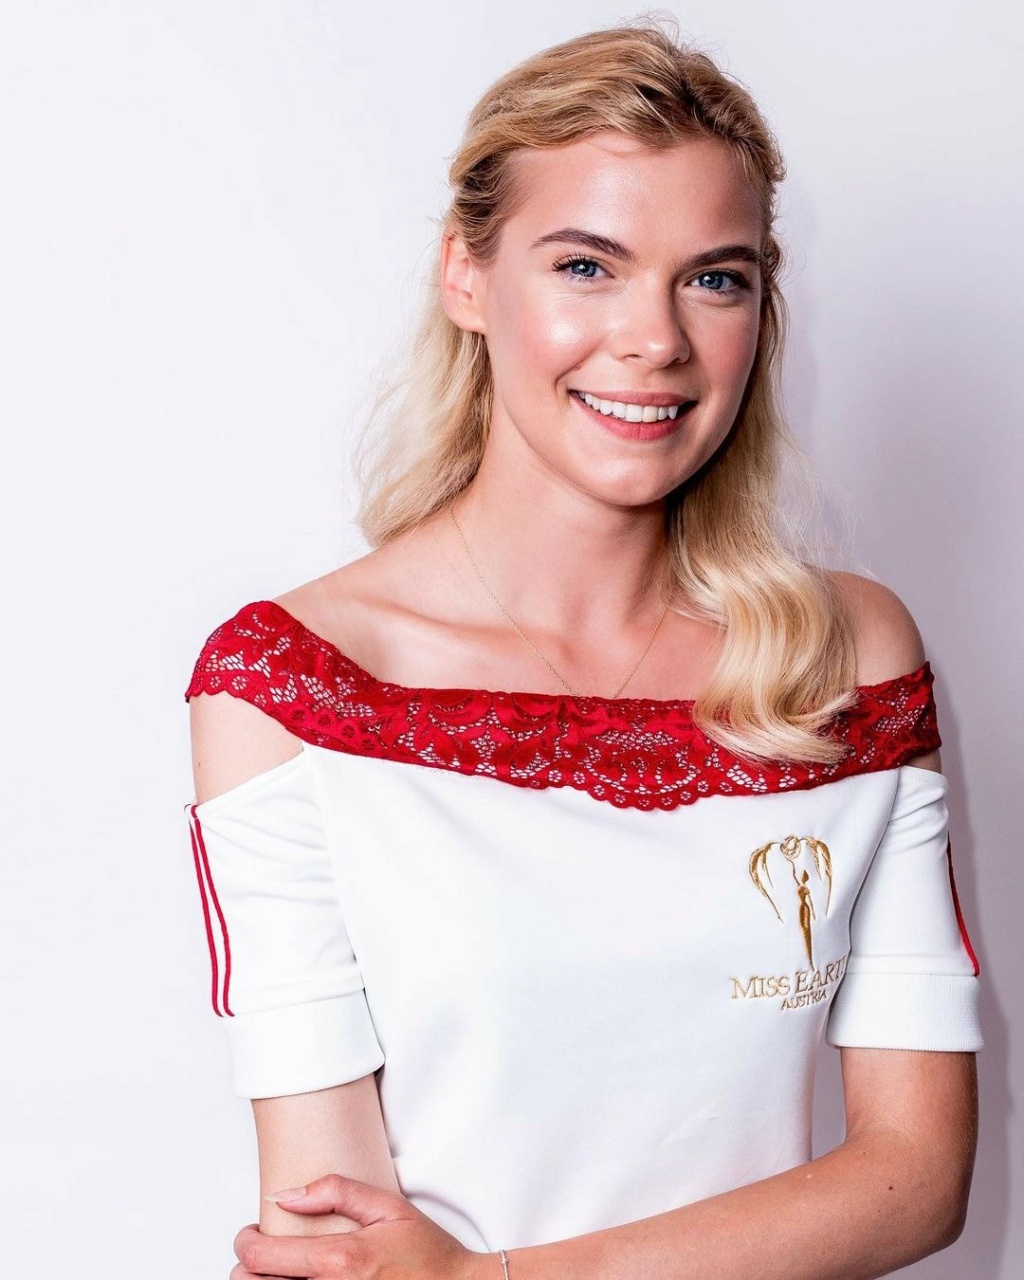 Miss Earth Austria 2021 is Klaudia Bleimer 21875511